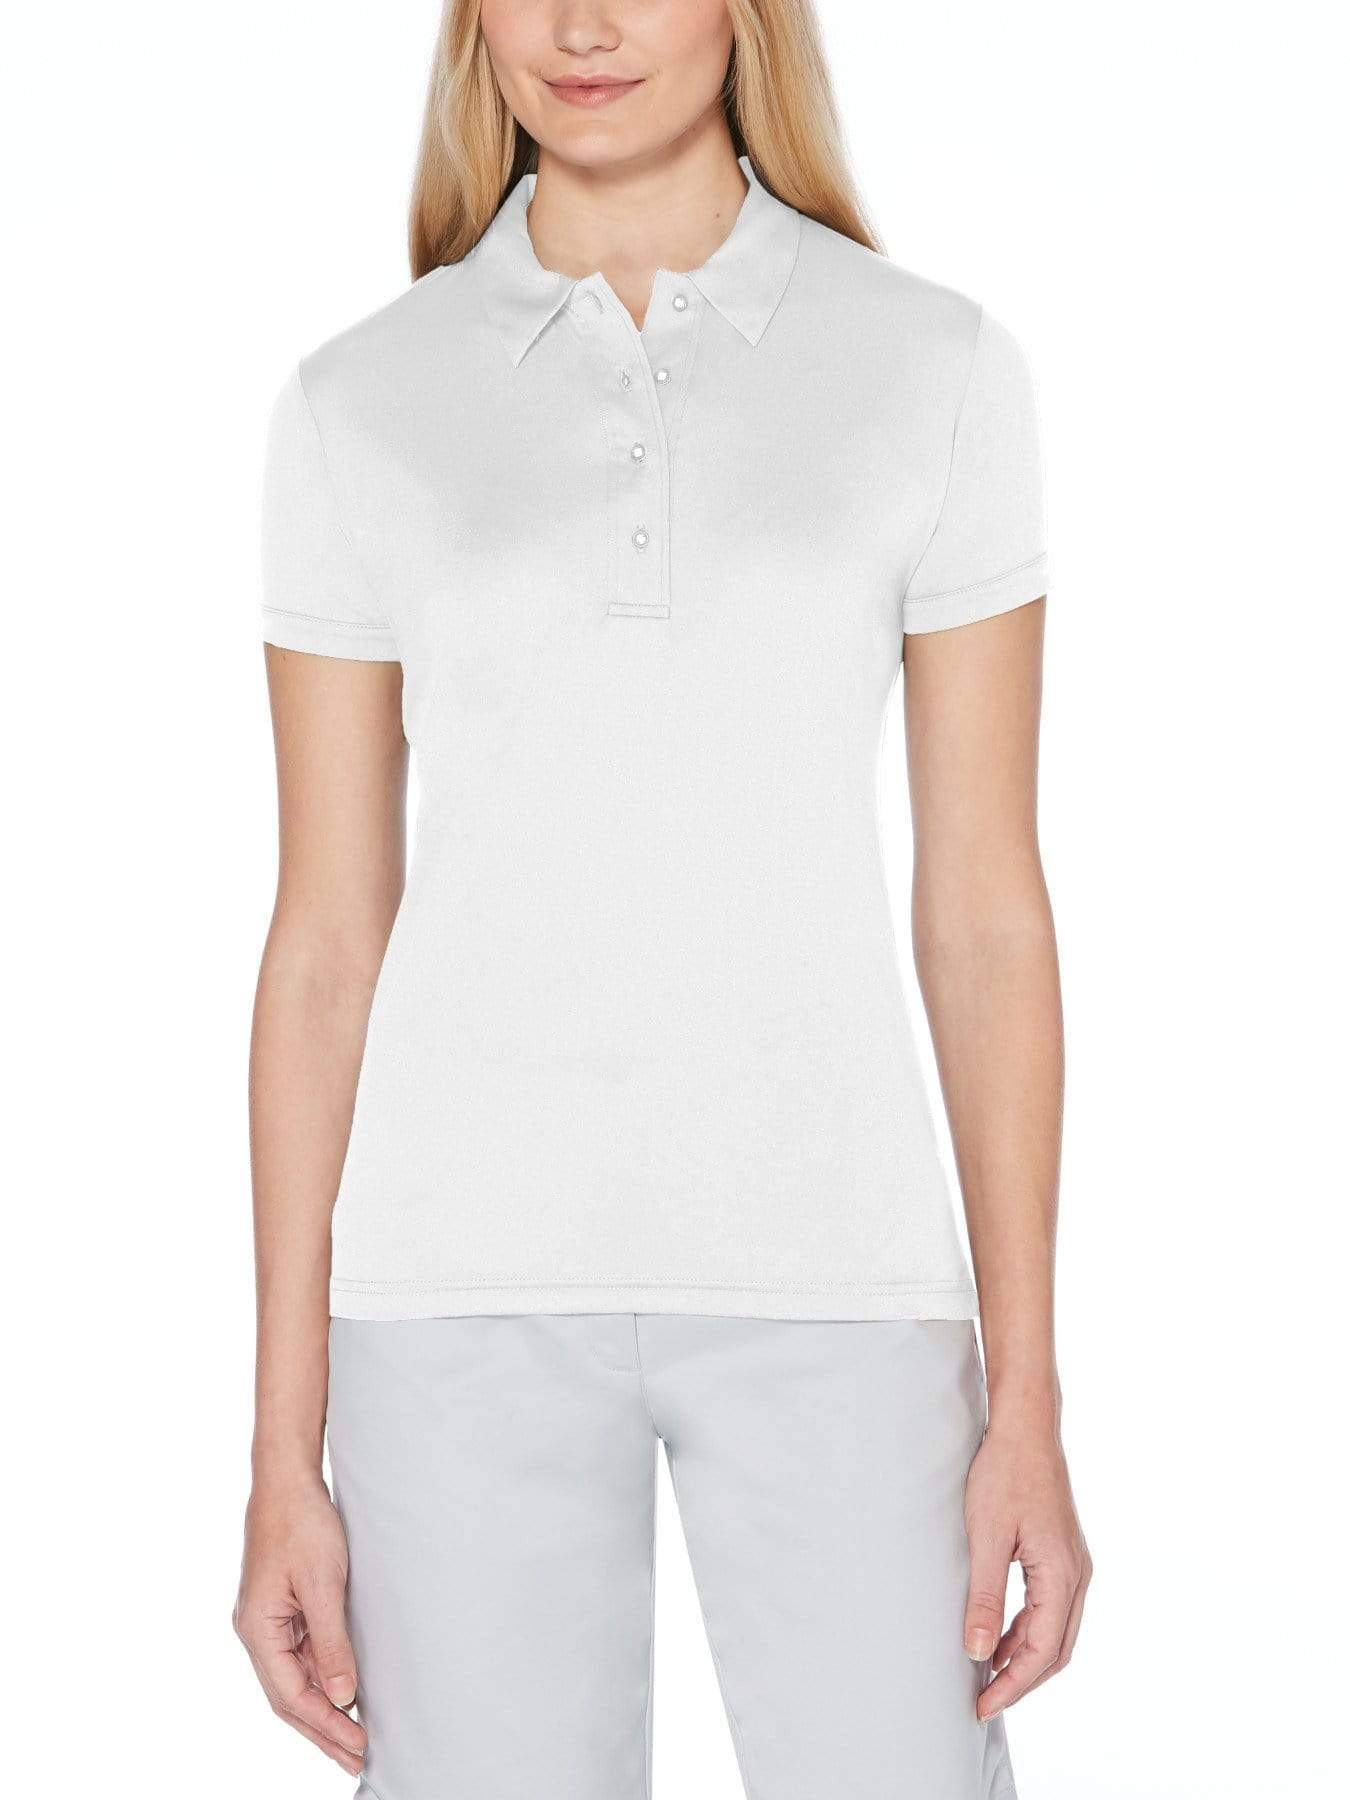 Original Penguin Womens Championship Polo Shirt, Size XL, White, 100% Polyester | Golf Apparel Shop